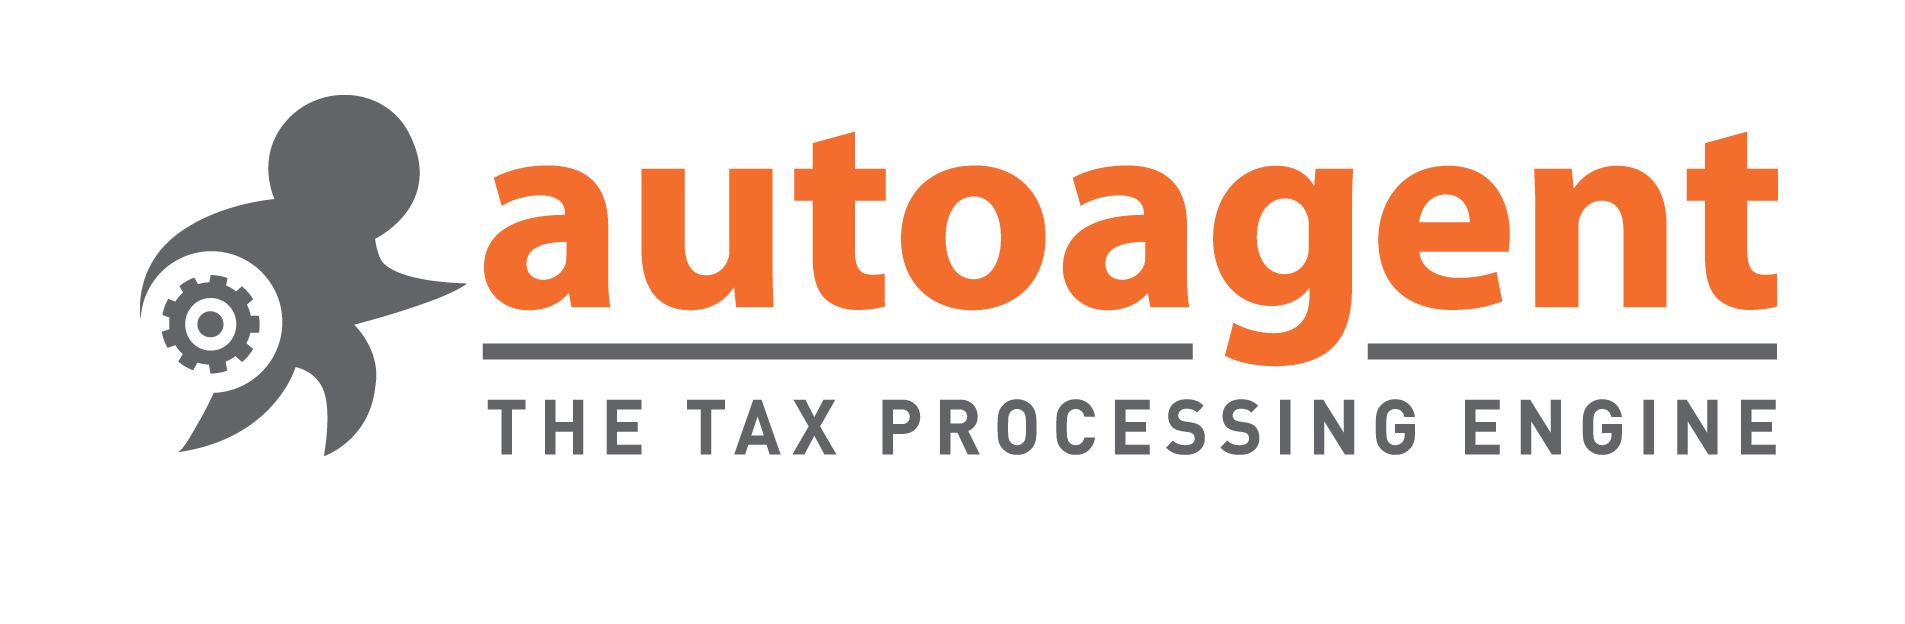 Autoagent Data Solutions, LLC logo